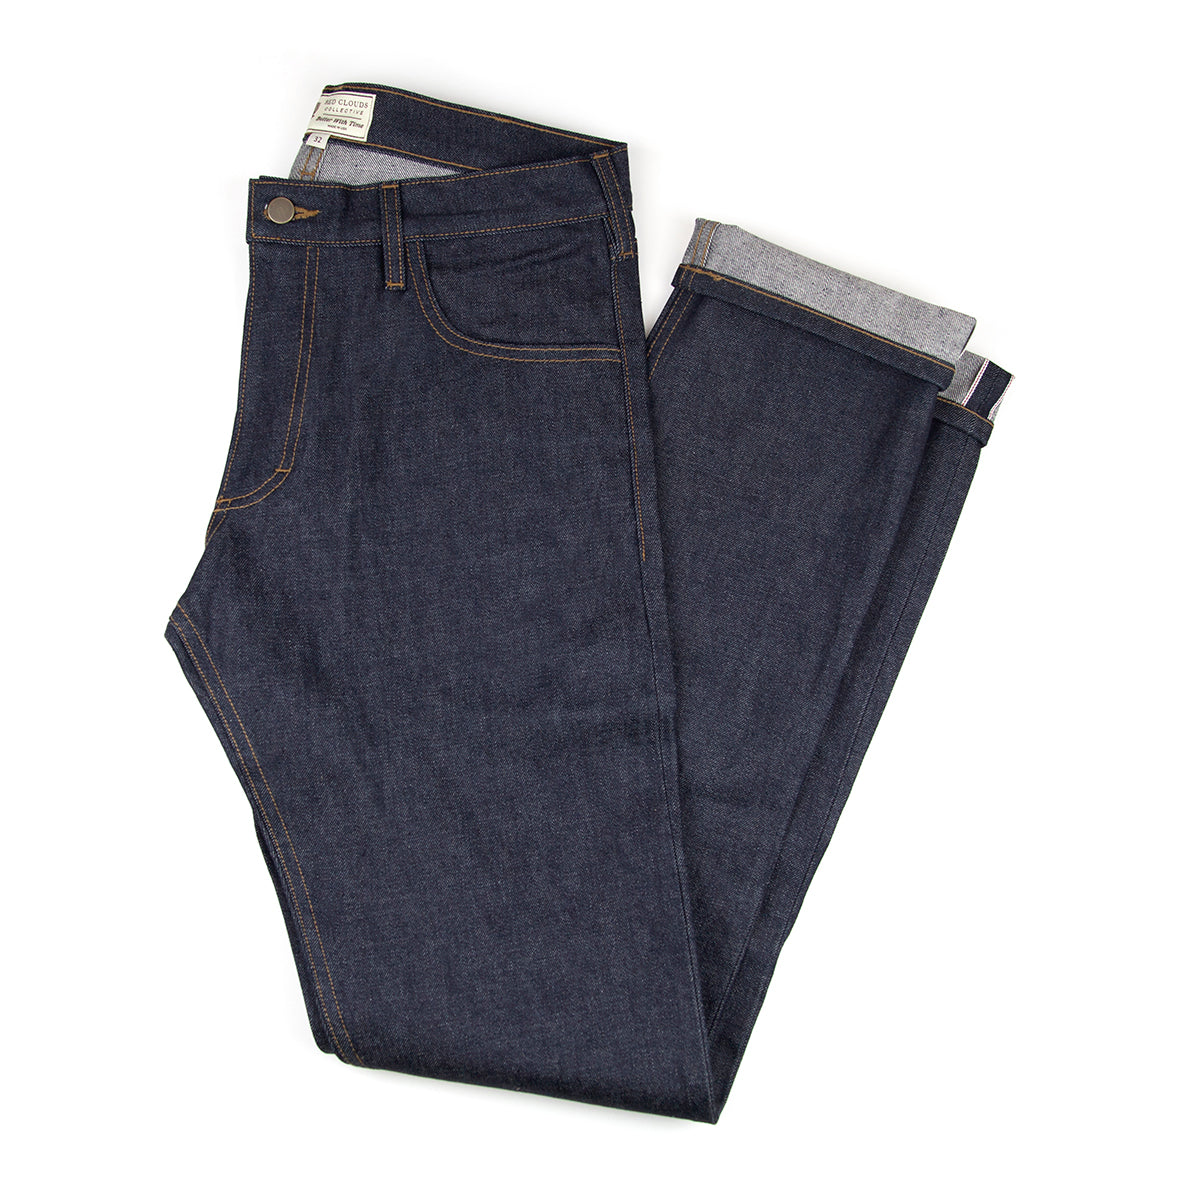 Dark Blue Clean Look Denim Jeans For Men (gbdnm6002), Gents Denim Pants,  मेन डेनिम जीन्स - Olive Attires Private Limited, Kannur | ID: 24819828173